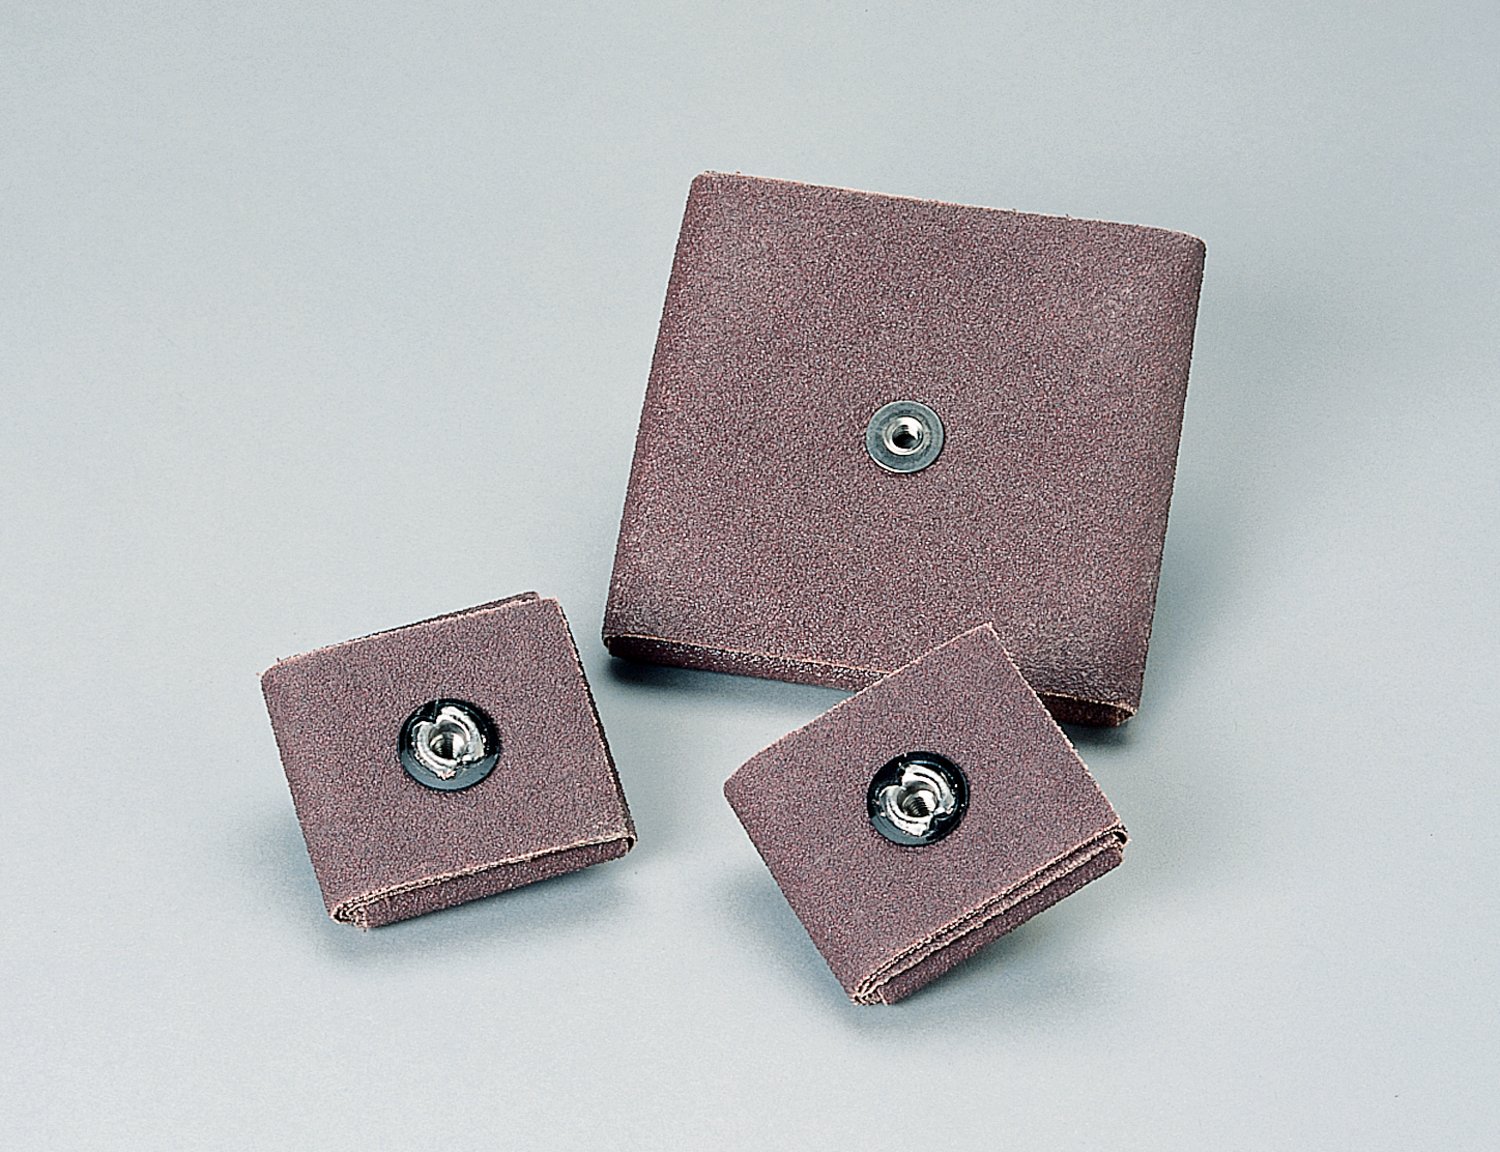 7100105432 - Standard Abrasives Aluminum Oxide Square Pad, 722813, 80, 1 in x 1 in x
1/2 in x 1/4"-20, 100/Carton, 1000 ea/Case